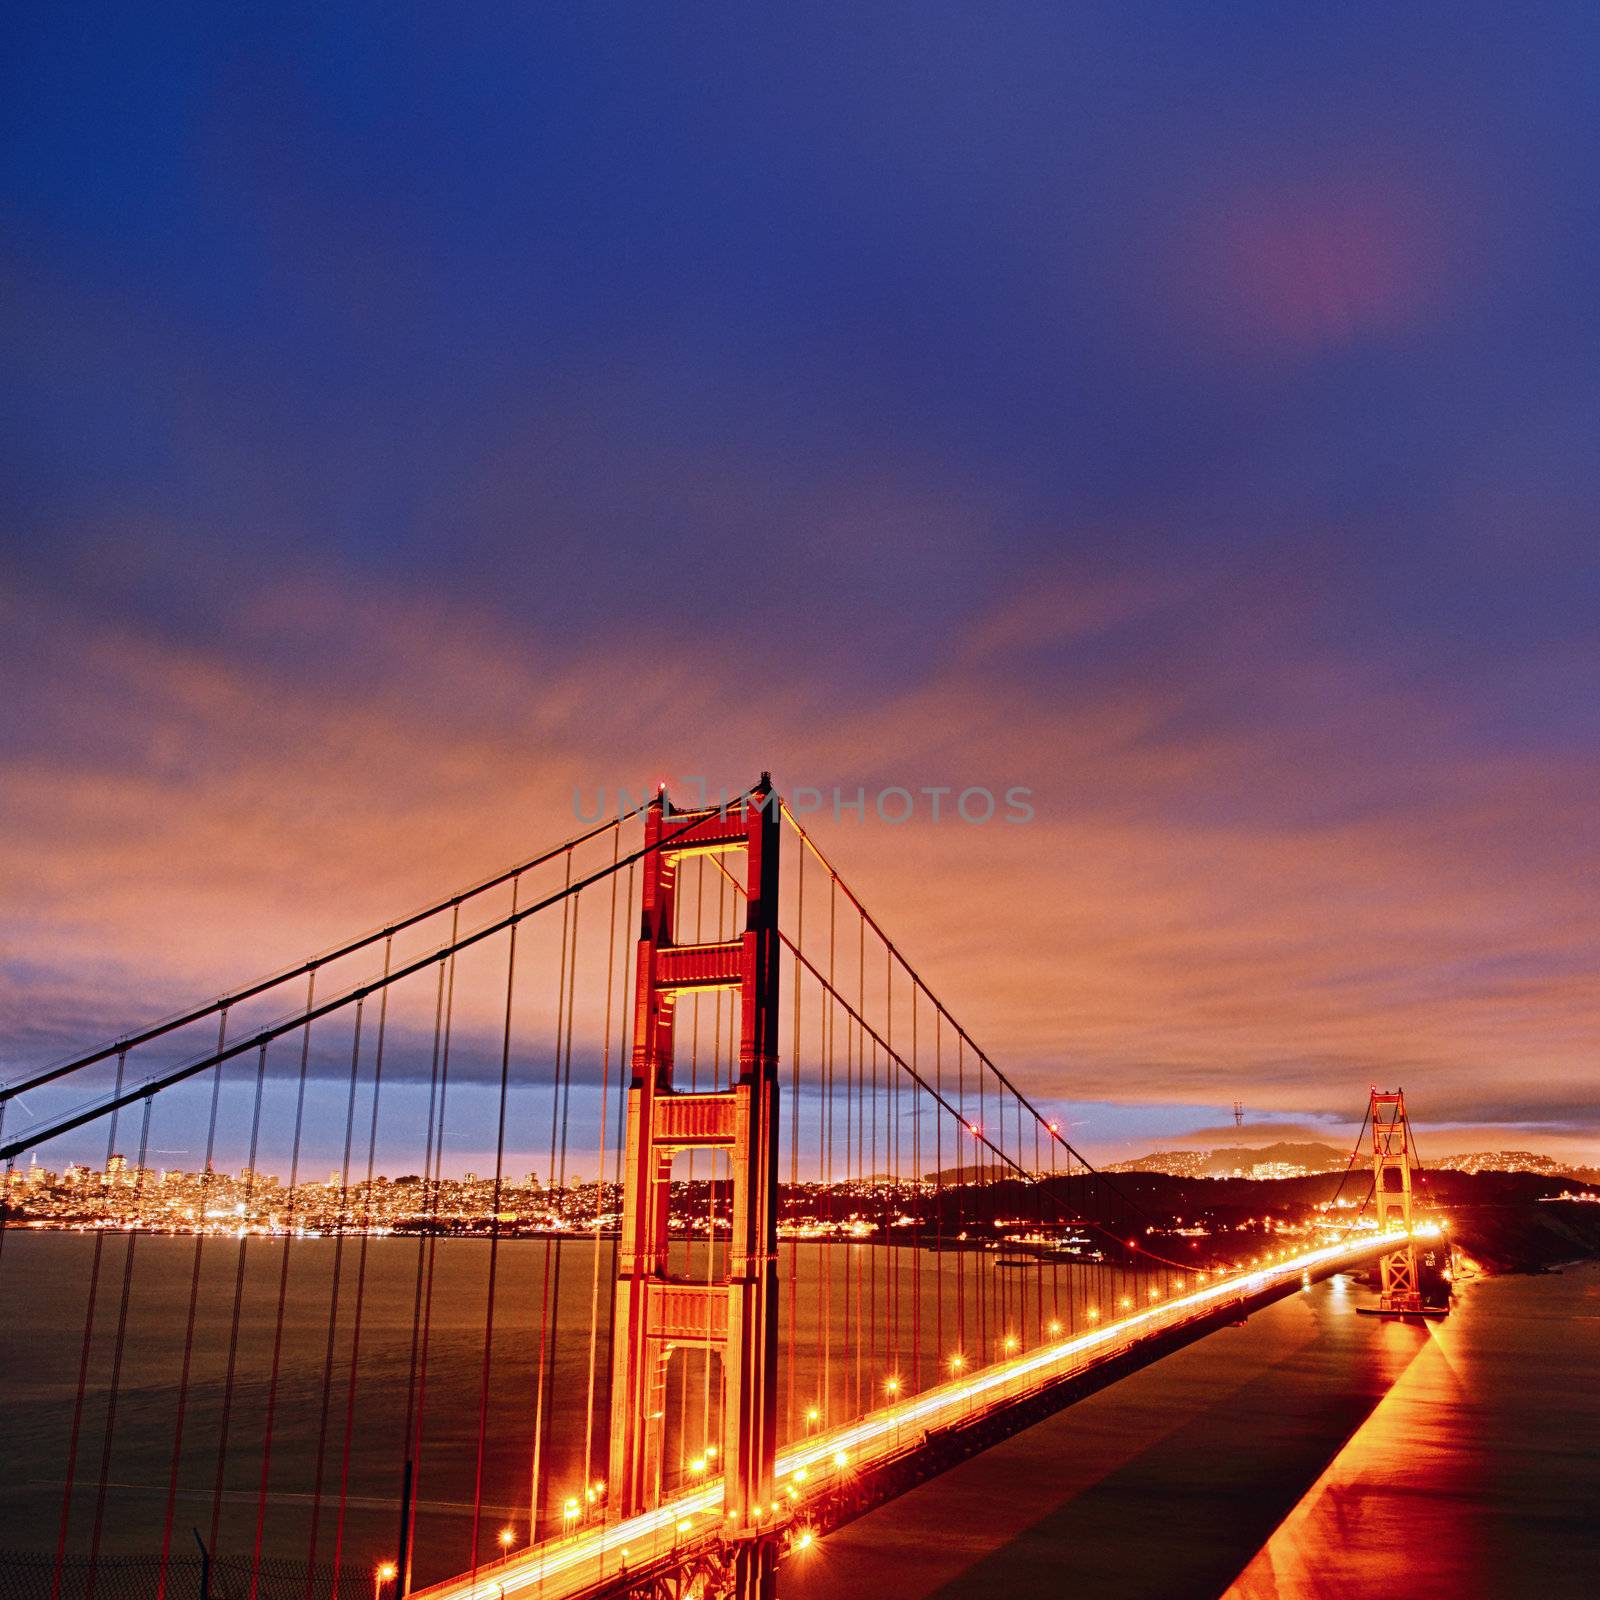 Night scene with Golden Gate Bridge and San Francisco lights